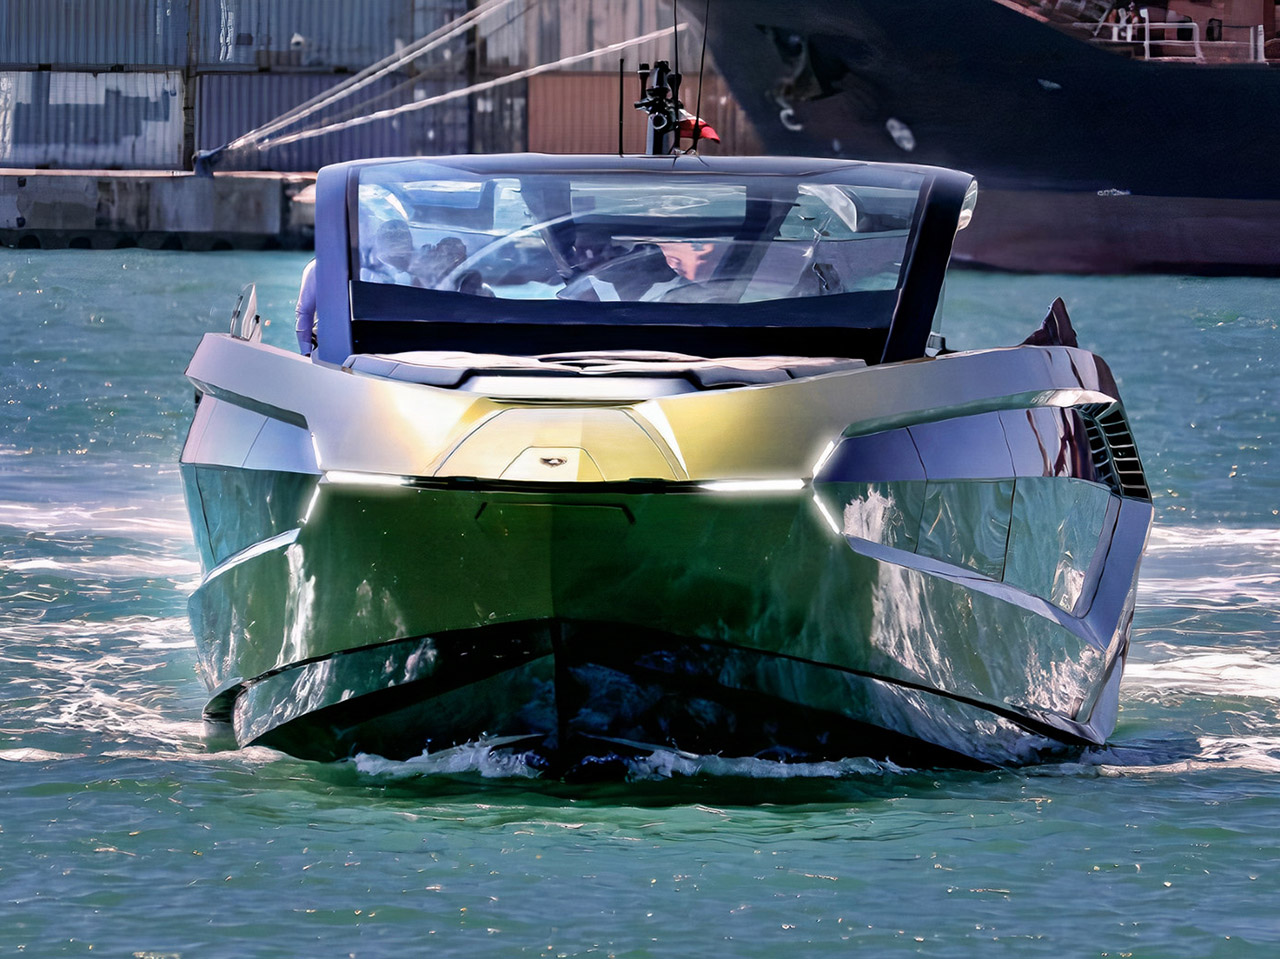 Tecnomar for Lamborghini 63 Yacht Boat